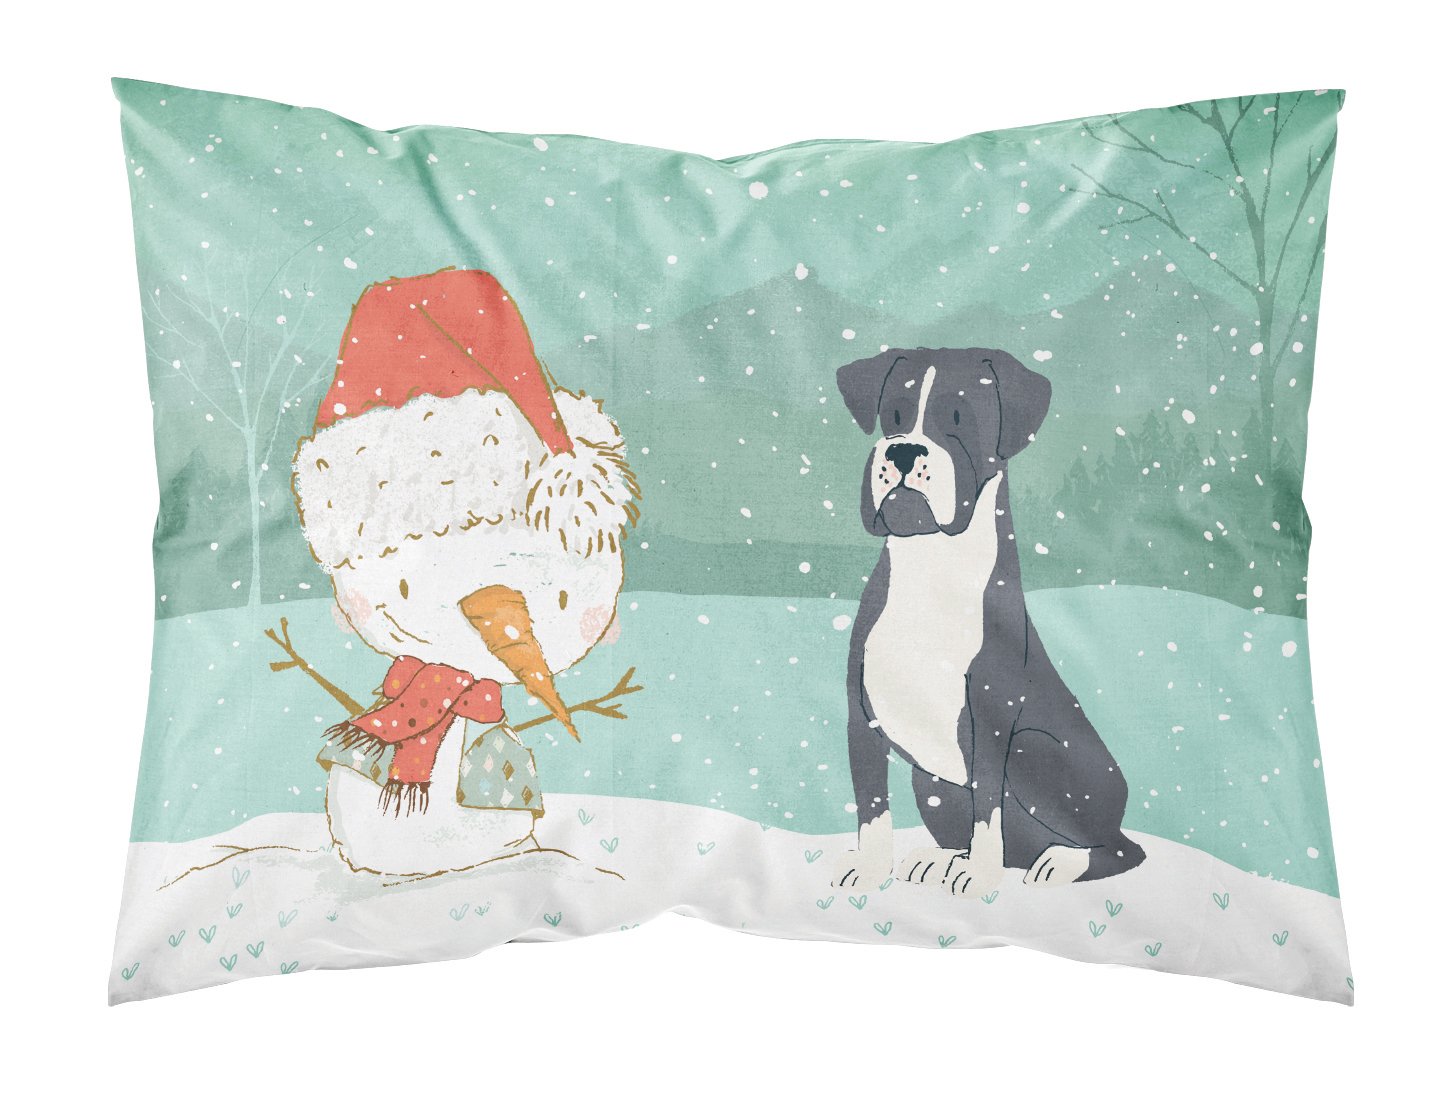 Black Boxer and Snowman Christmas Fabric Standard Pillowcase CK2035PILLOWCASE by Caroline's Treasures